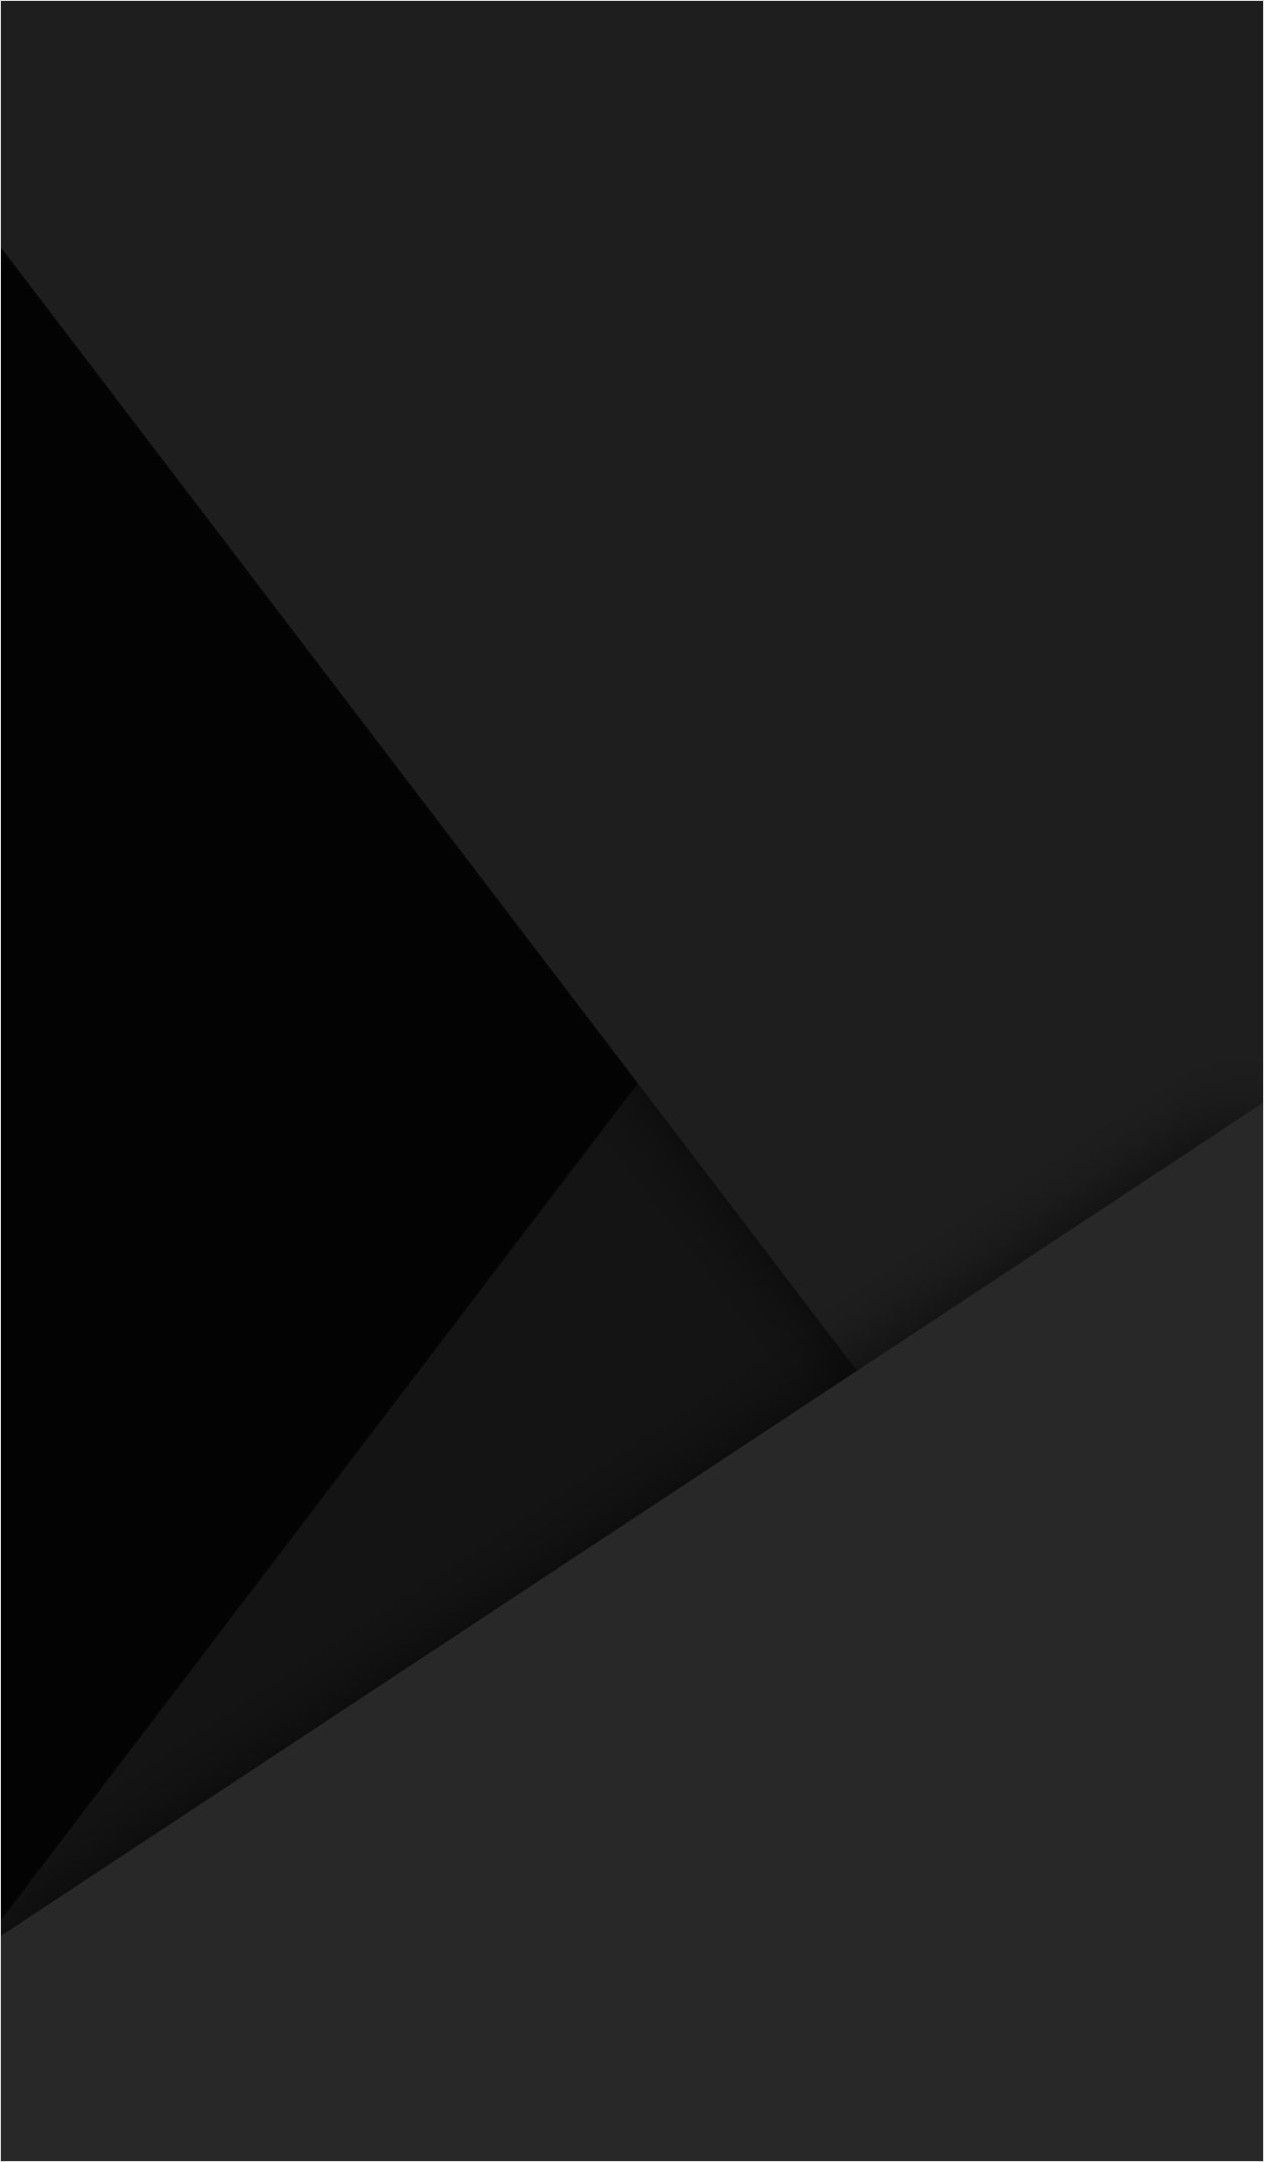 4k Dark And Gray Forgiveness Wallpaper. Pure black wallpaper, Black wallpaper, Black phone wallpaper